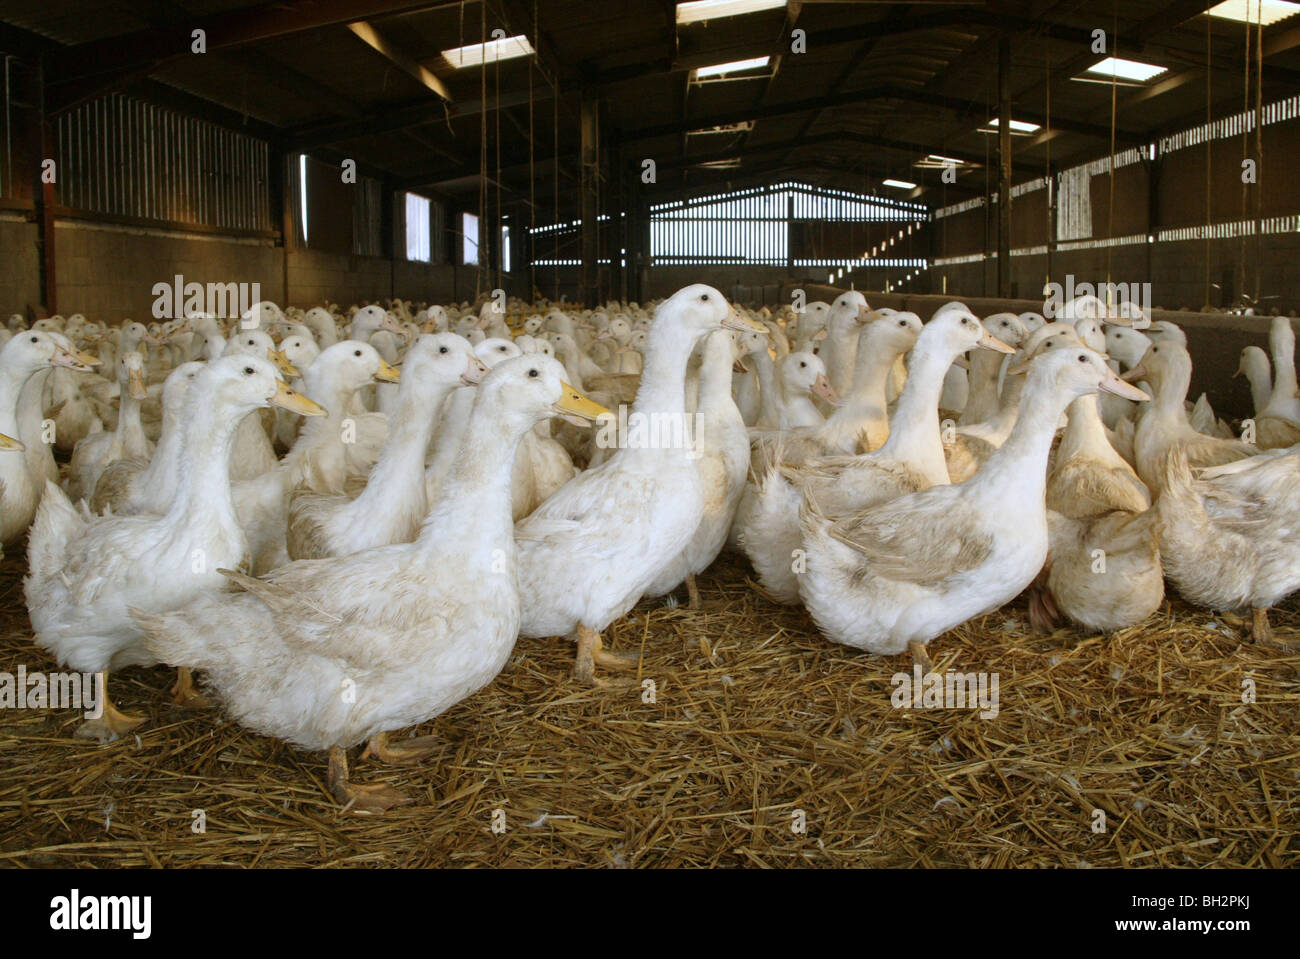 Barn feed ducks for egg production Stock Photo